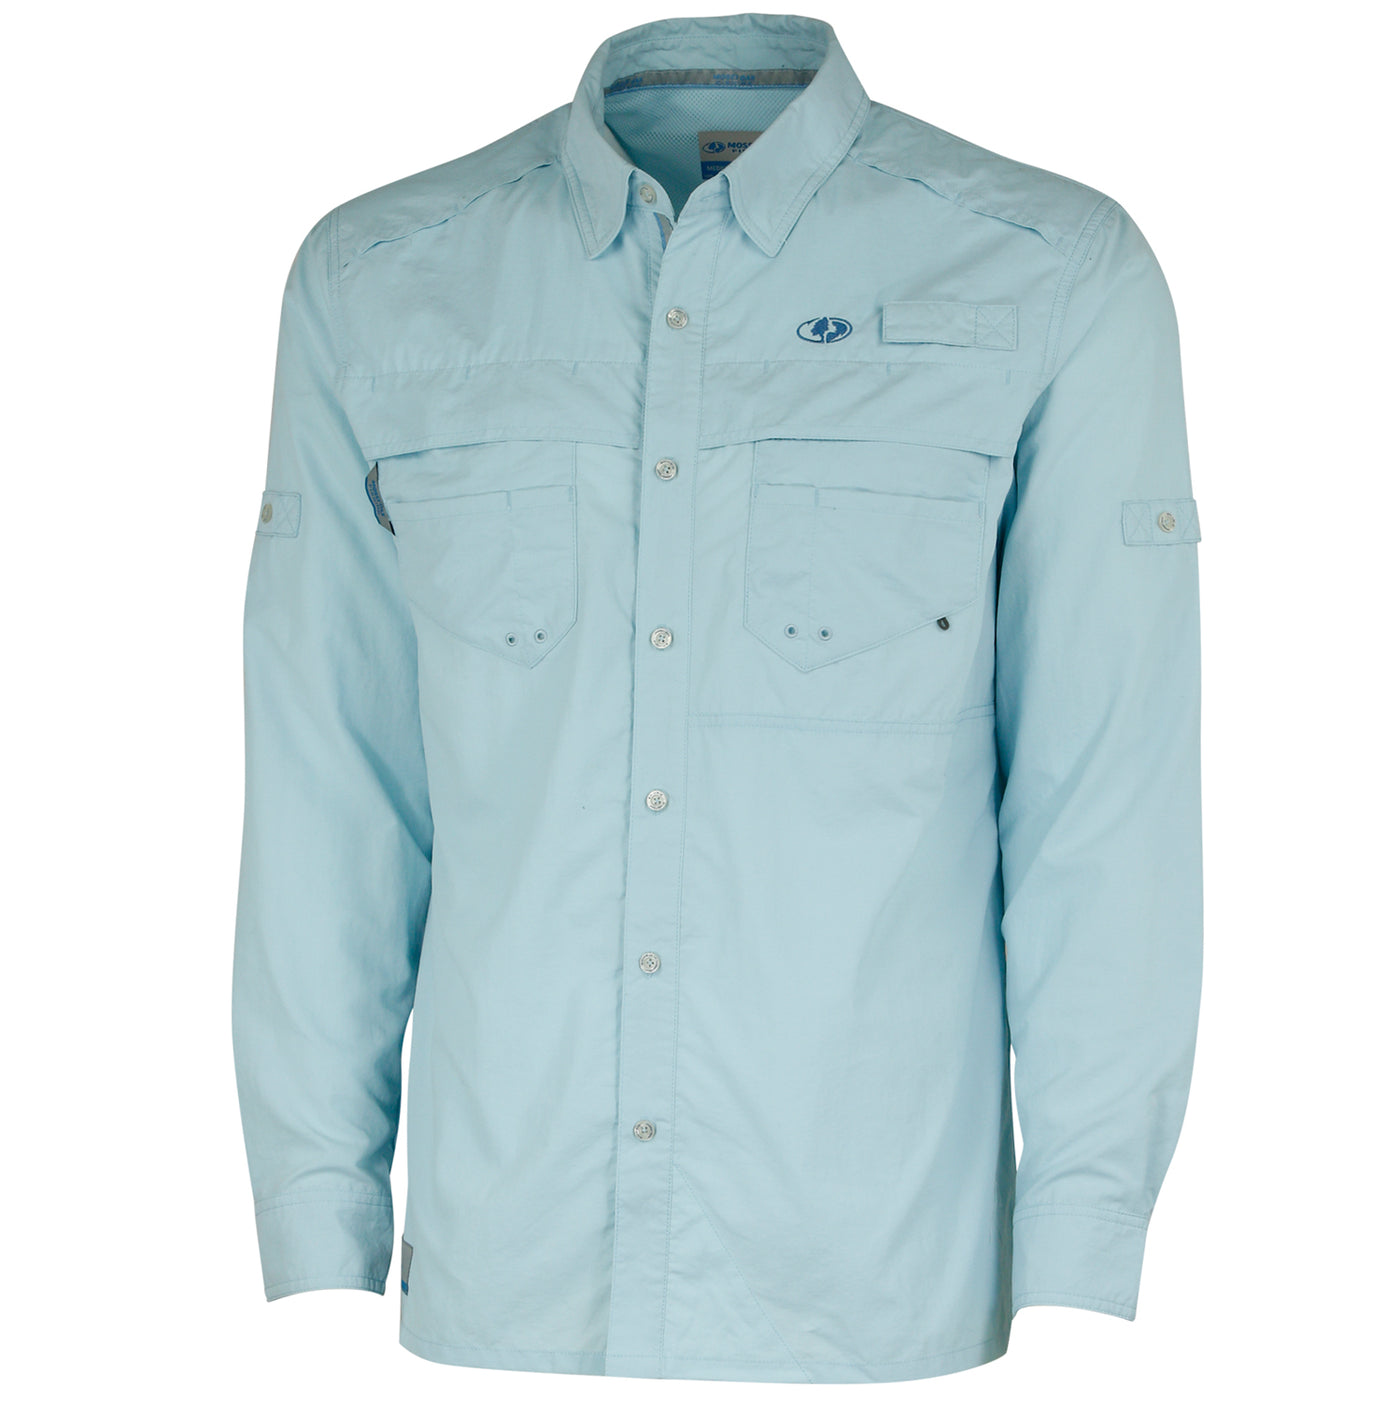 Mossy Oak Men's Long Sleeve Button Down Fishing Shirt Cool Blue Front